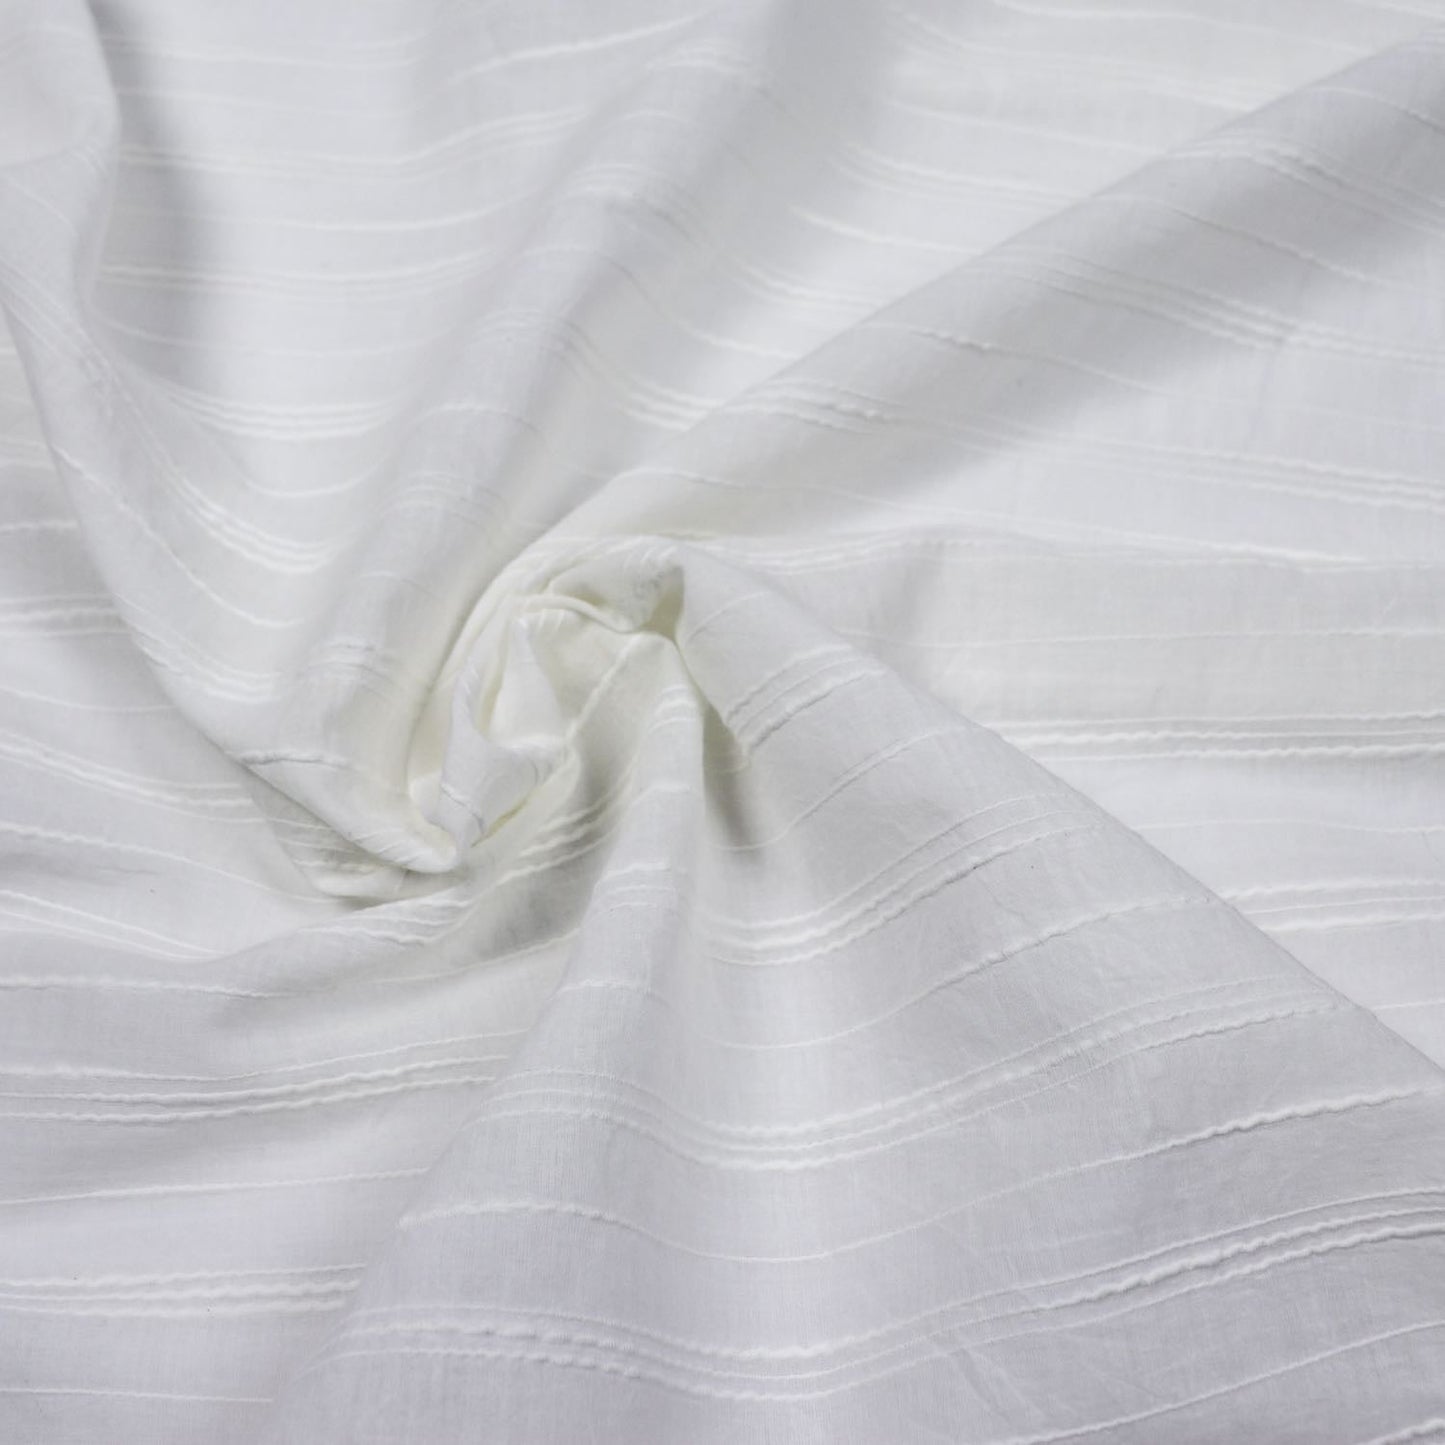 Sinuous Stripe Handloom Cotton — 0.4 Yard Remnant